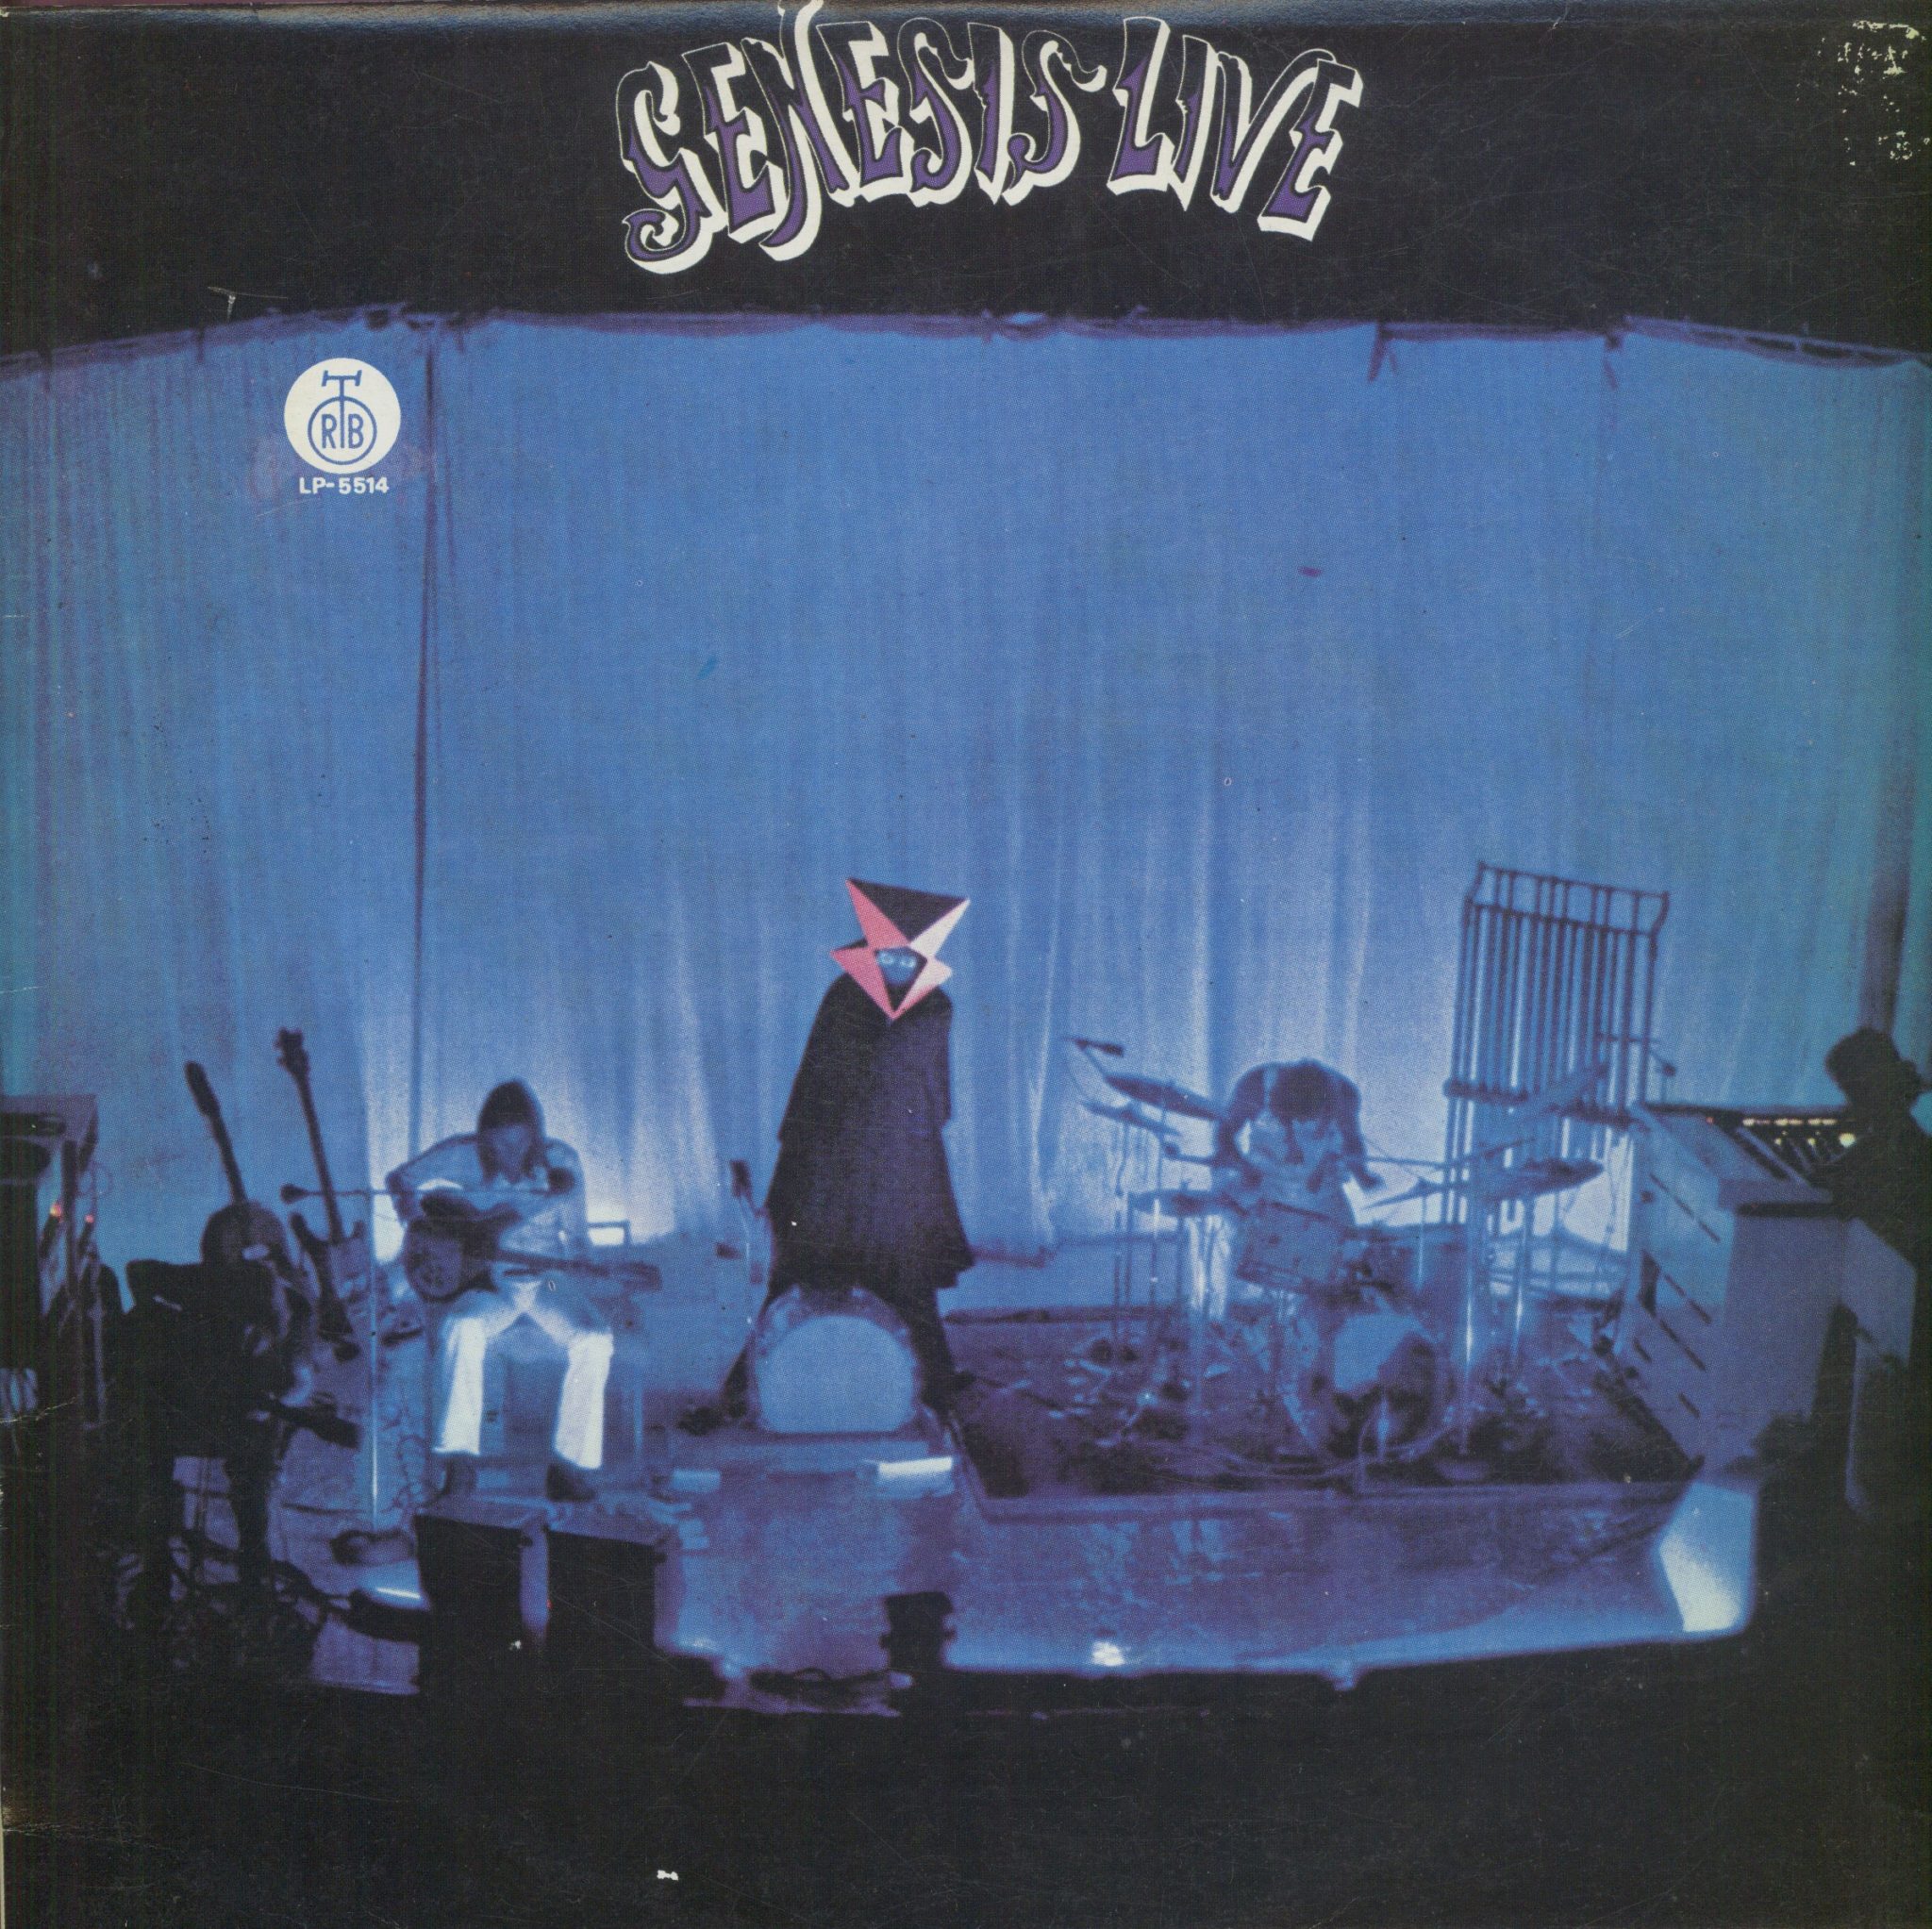 Gramofonska ploča Genesis Live LP 5514